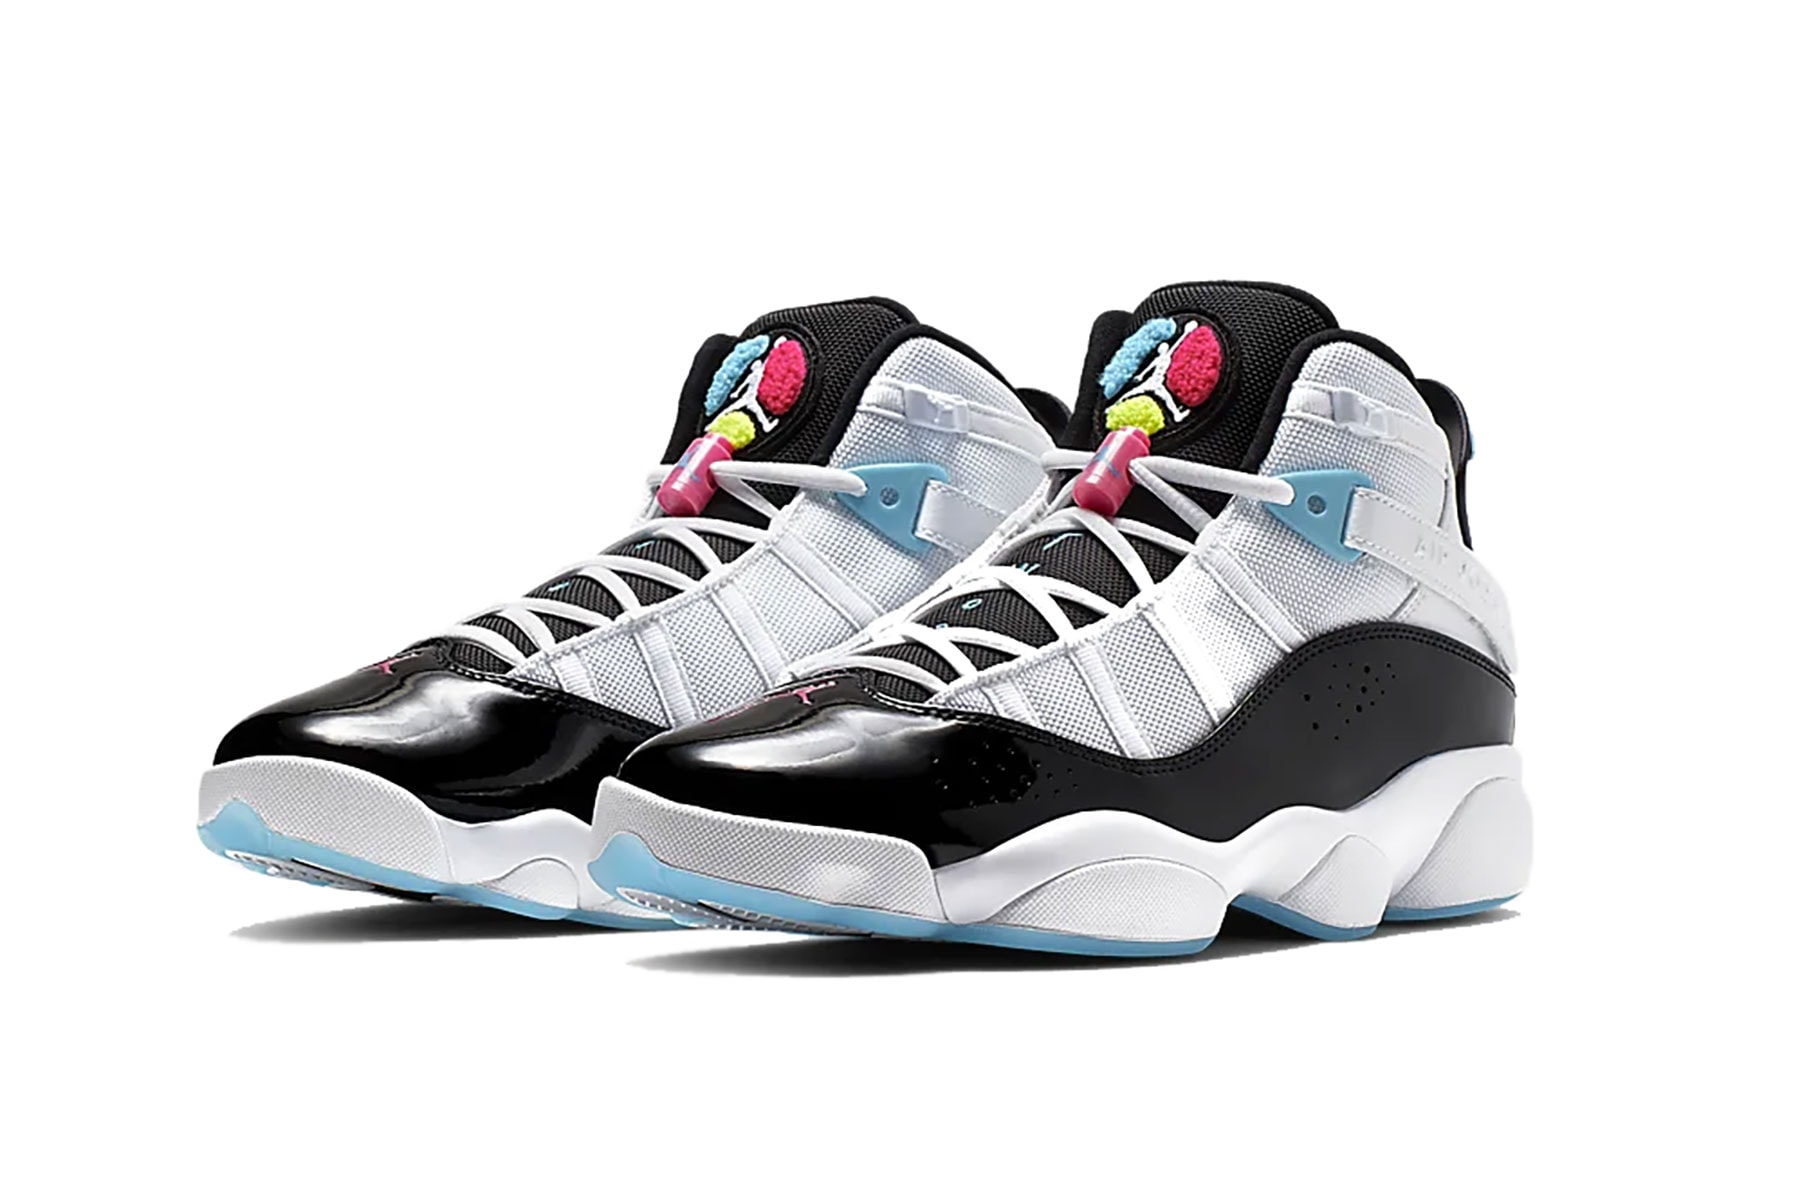 nike air jordan 6 rings six hyper pink blue white black fury sneakers shoes kicks basketball